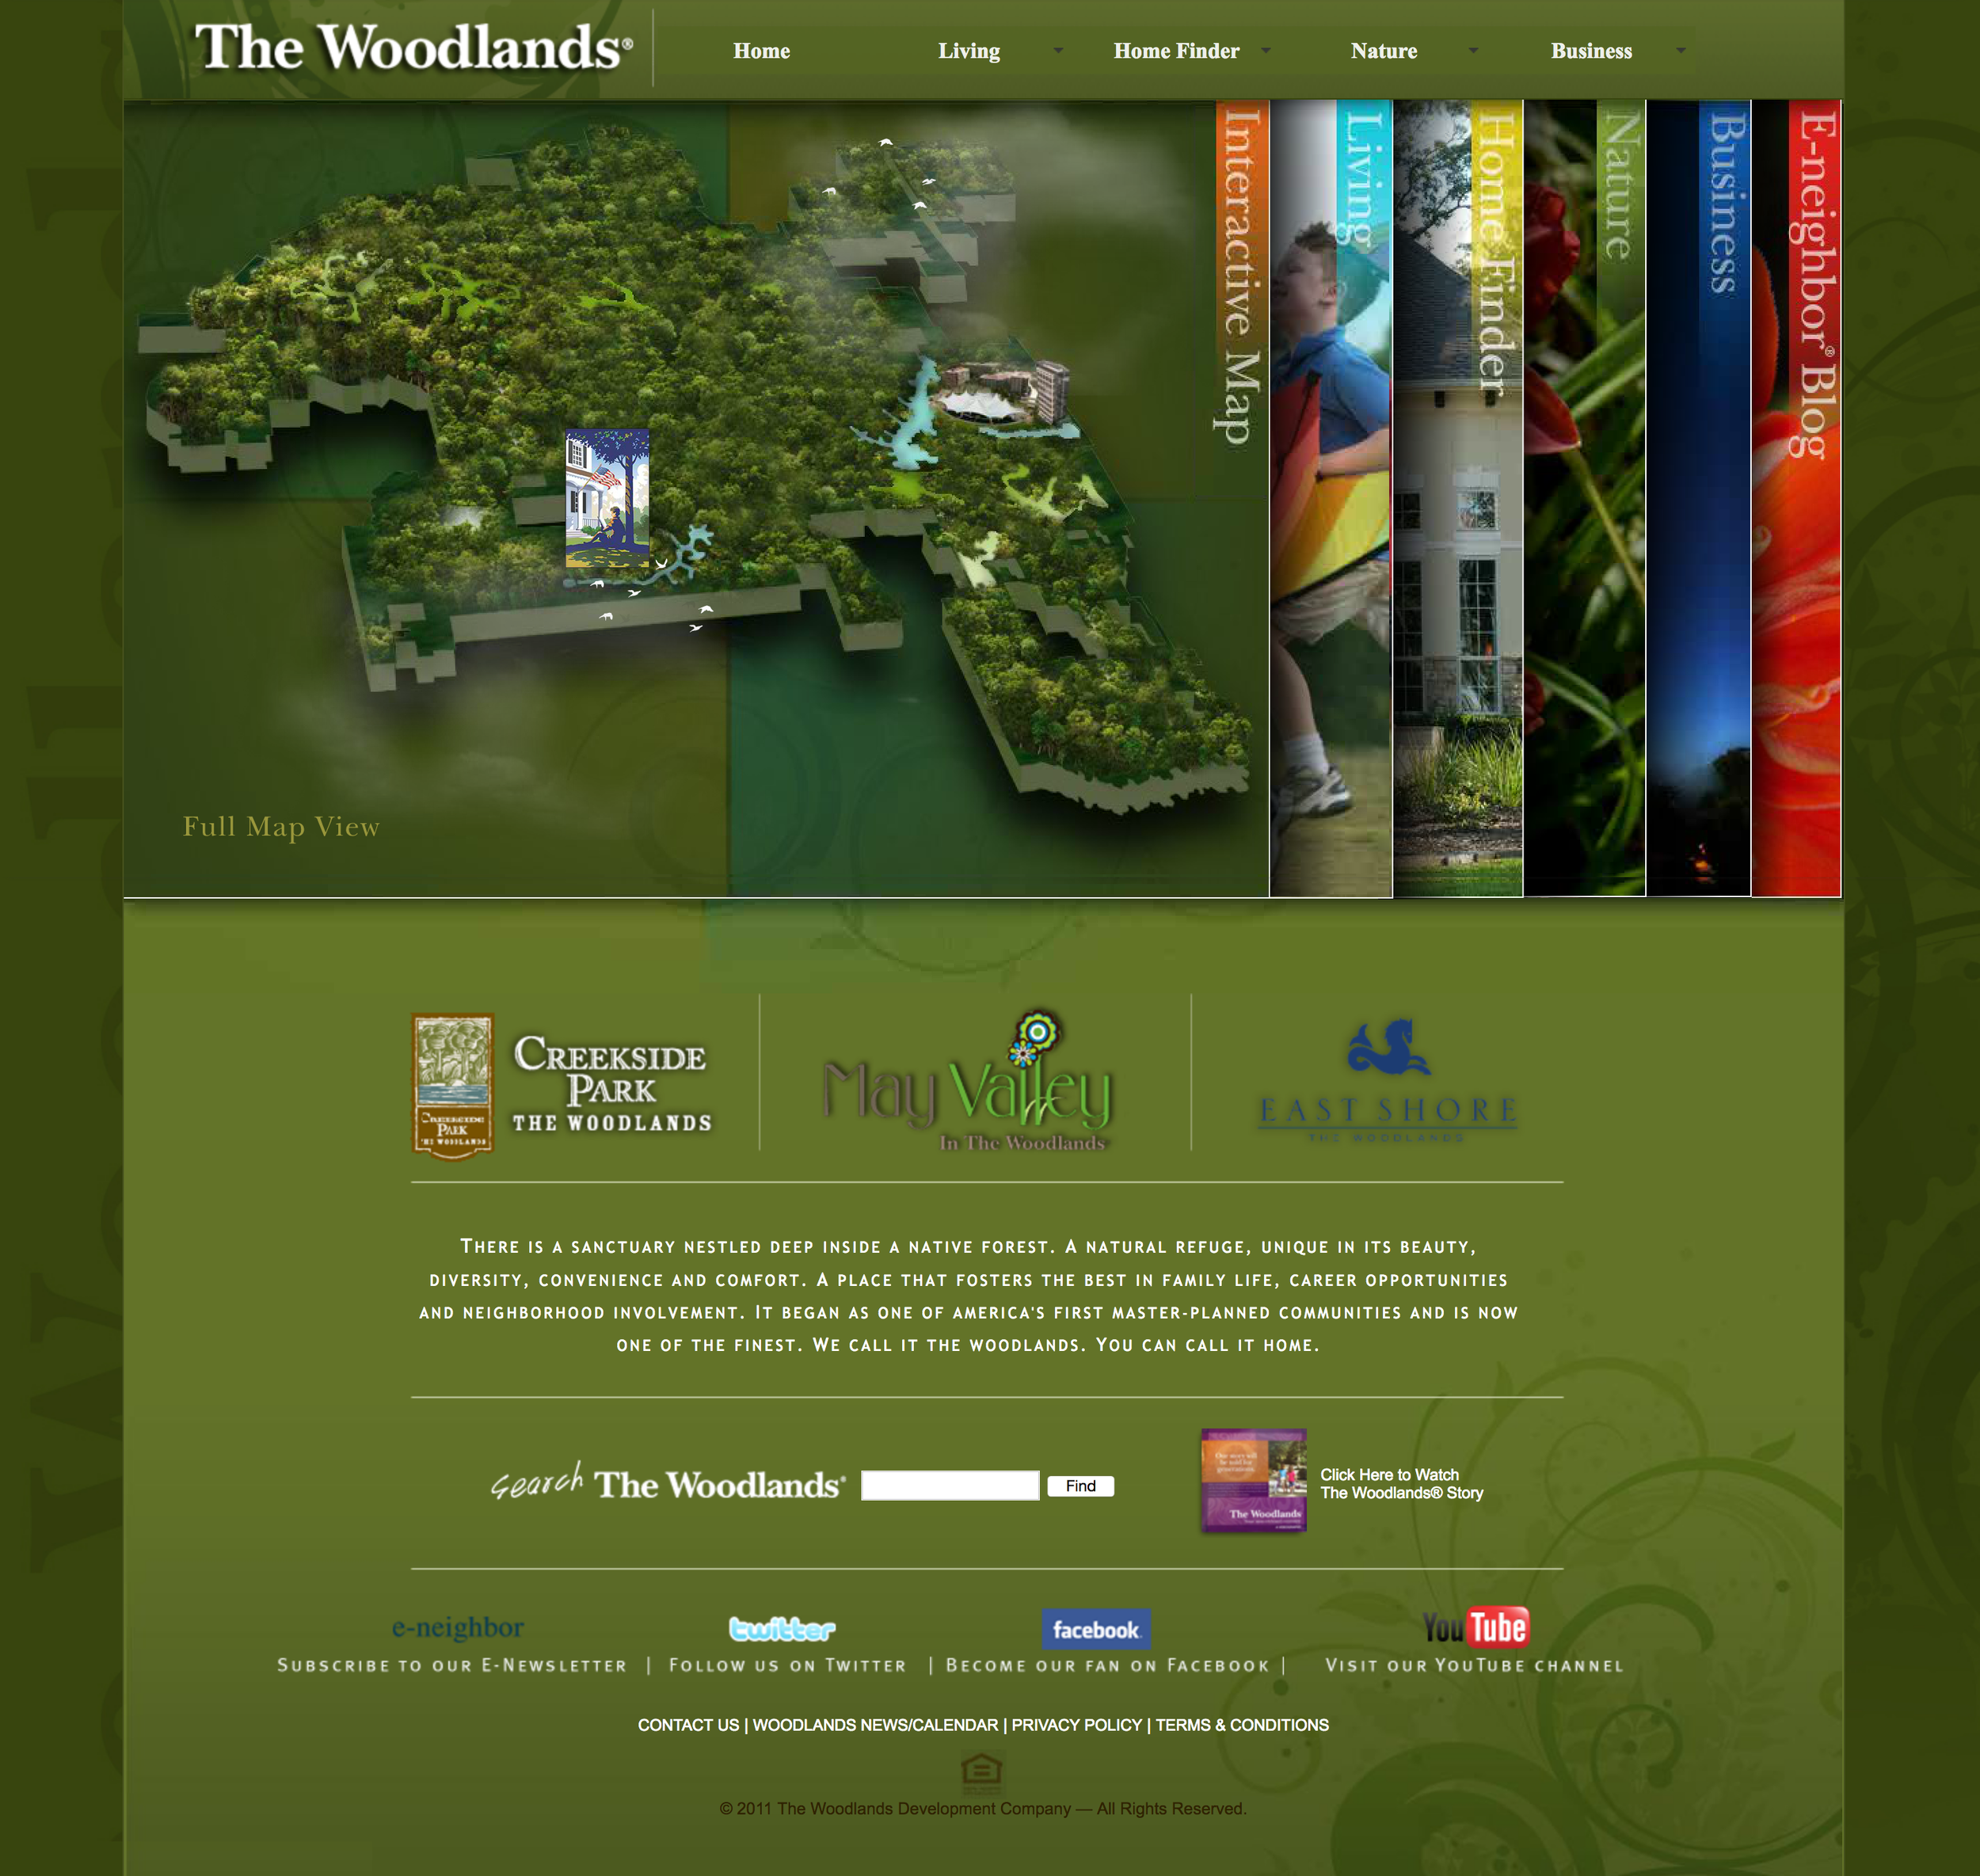 The Woodlands Website